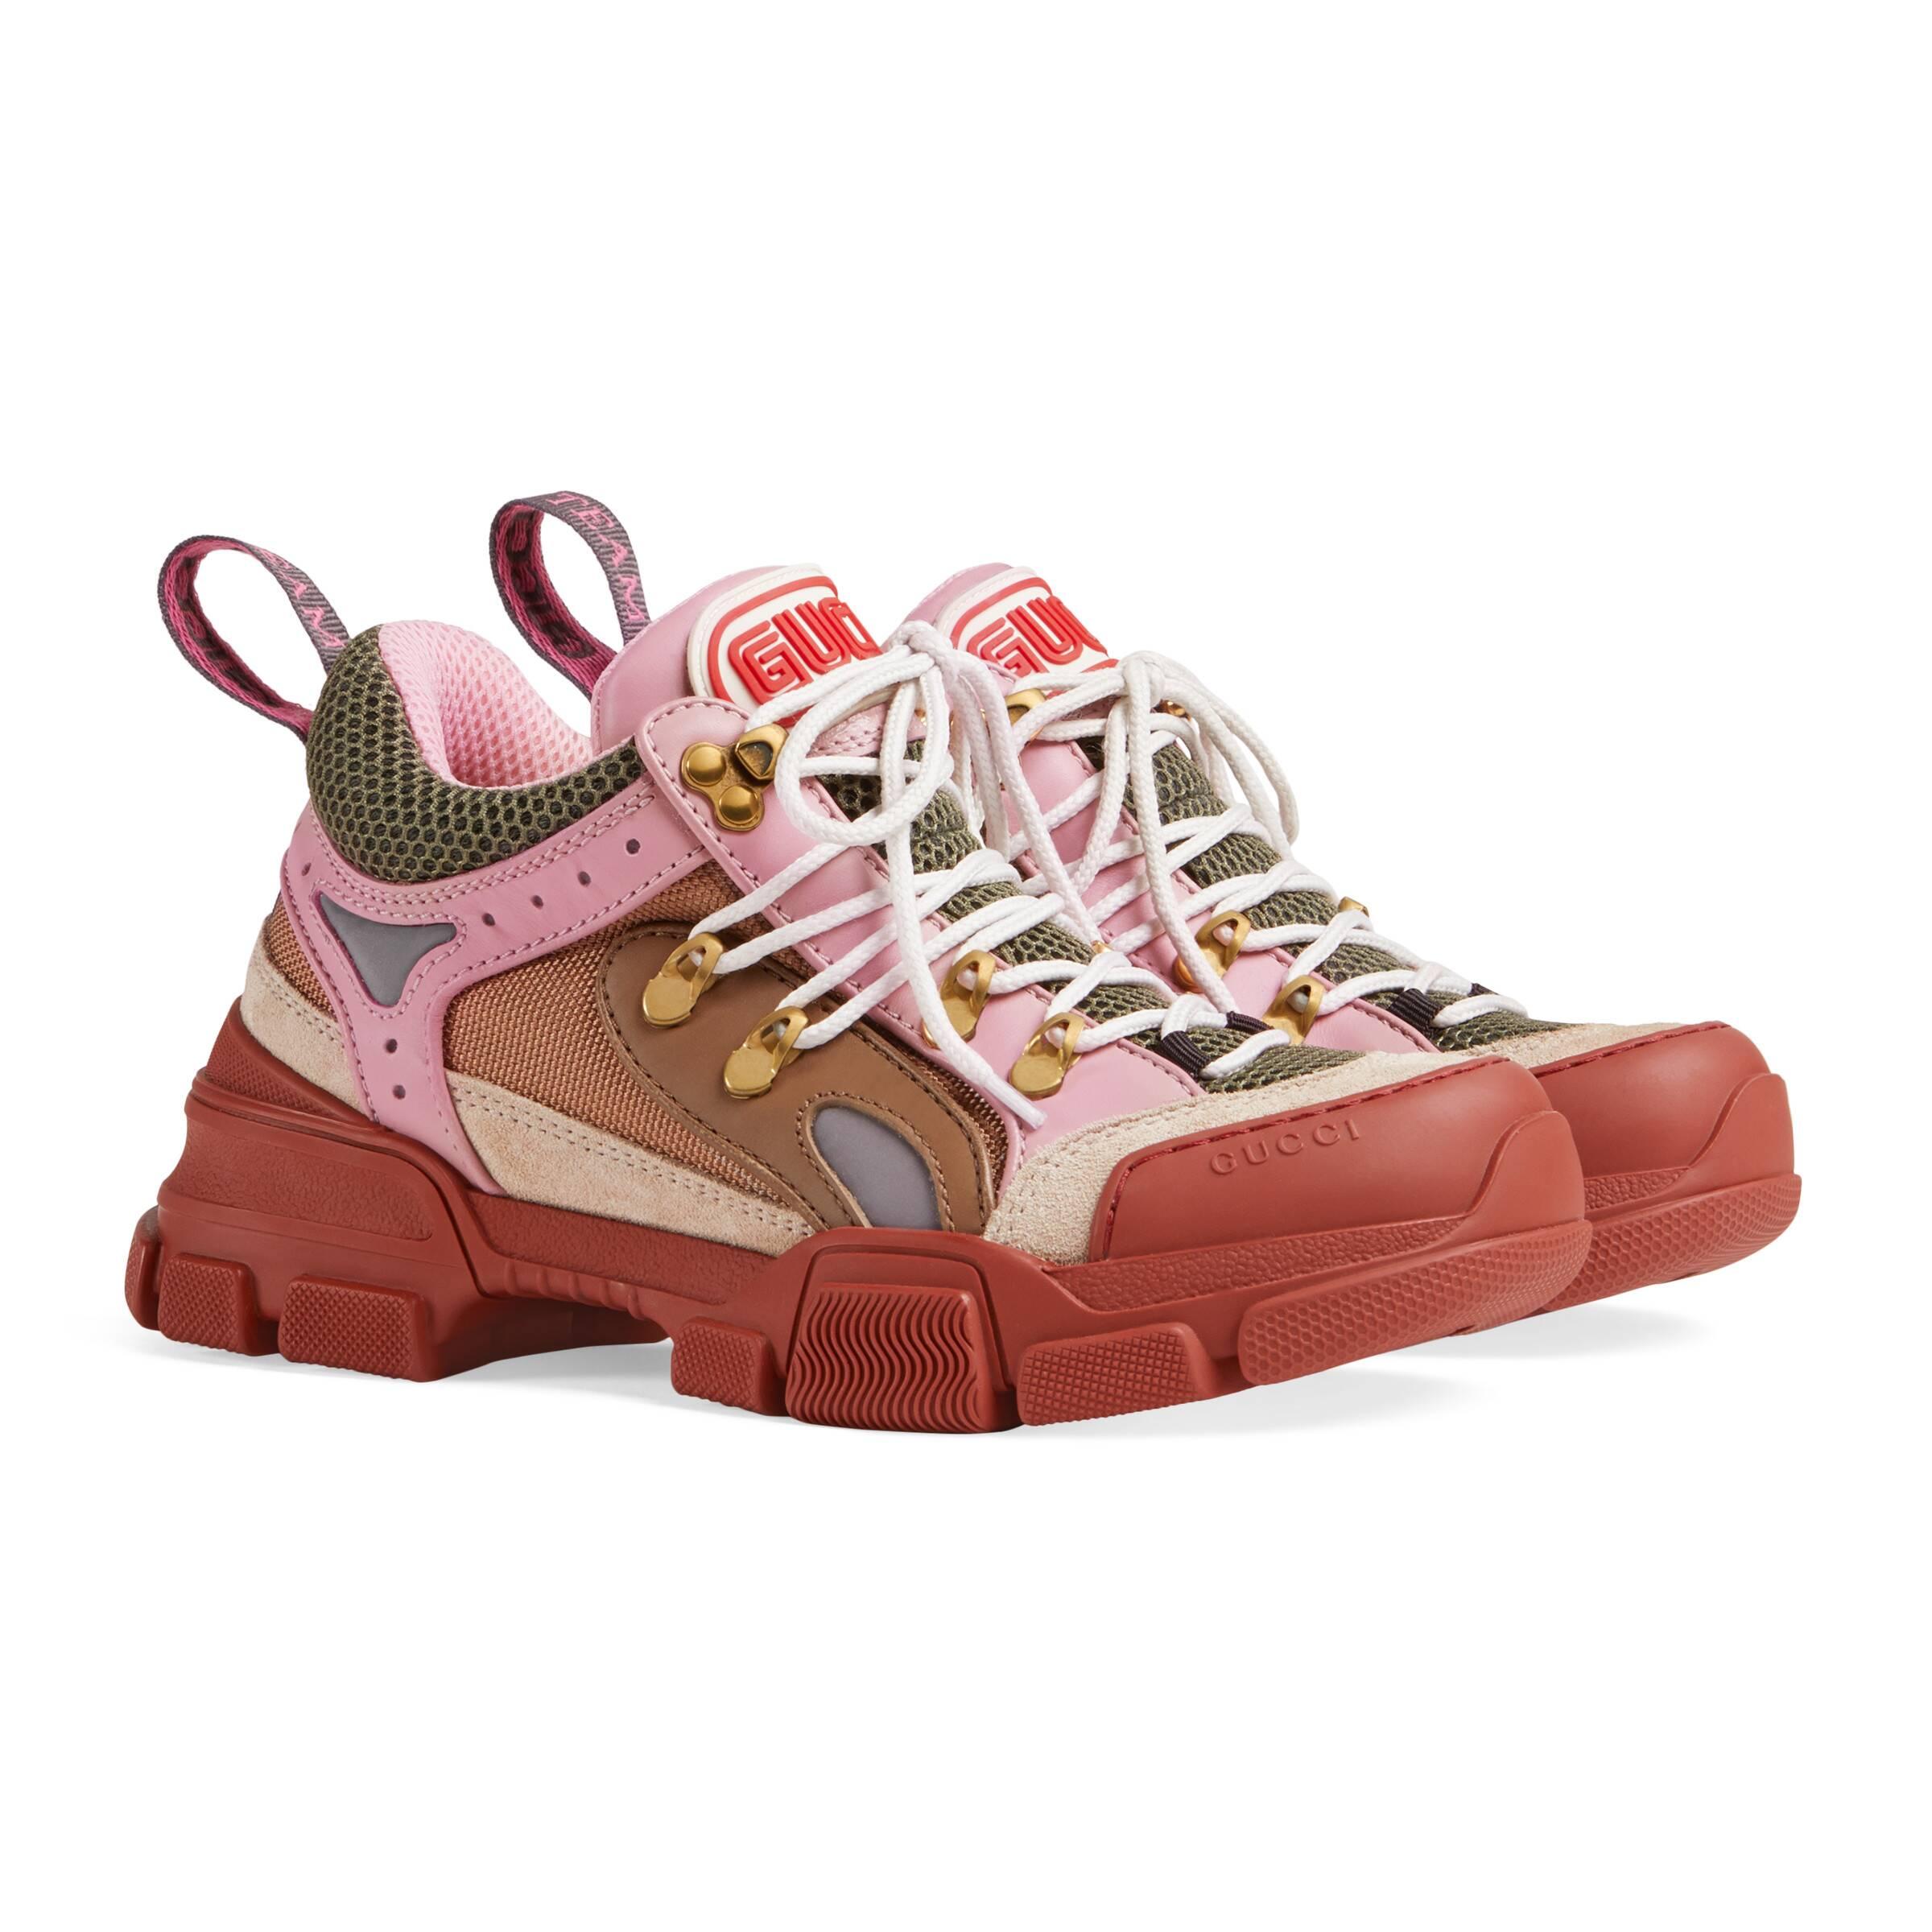 Gucci Rubber Flashtrek Sneaker in Pink - Lyst